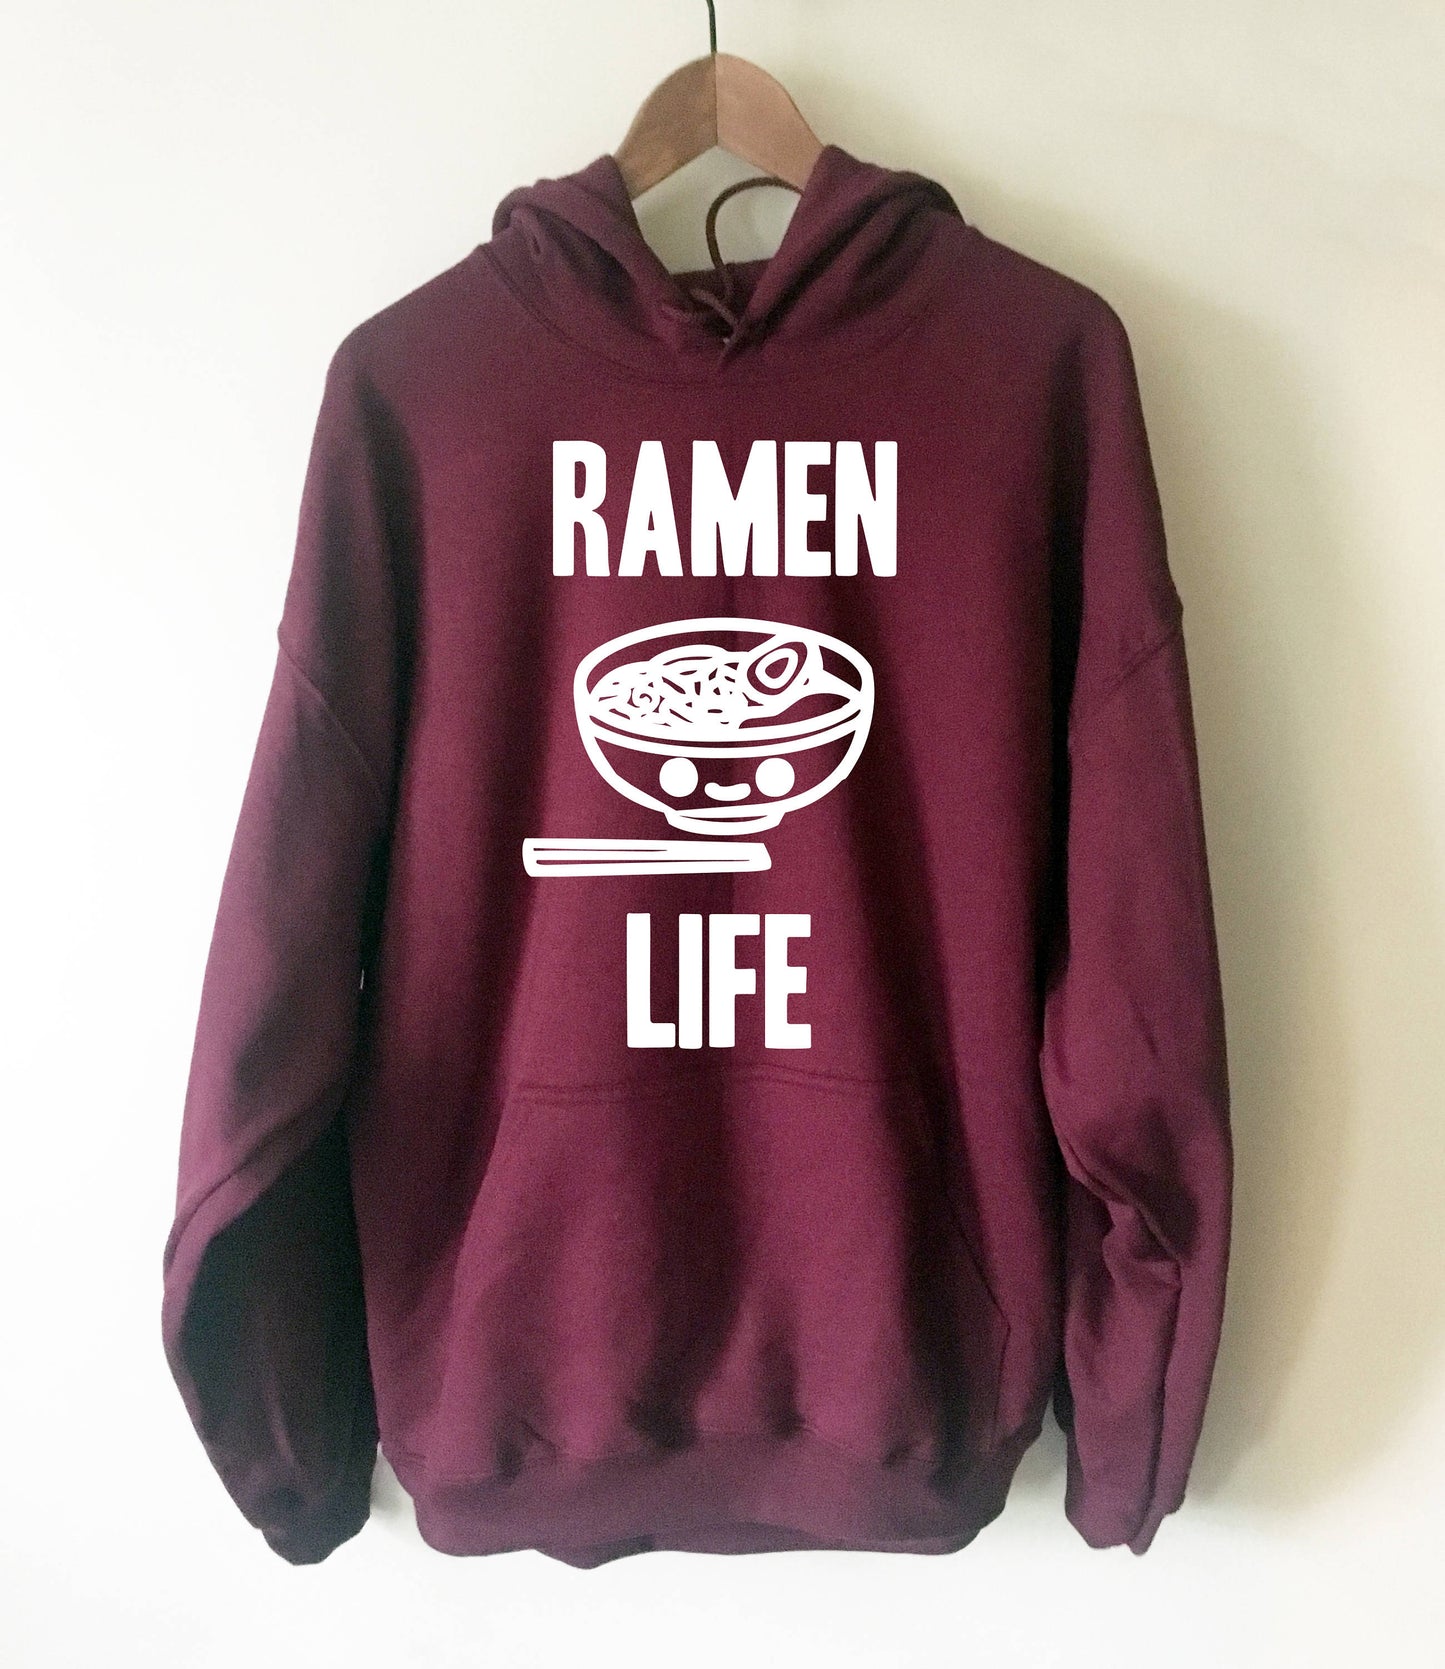 Ramen Life Hoodie - Ramen Shirt, Japanese T-Shirt, Noodle Shirt, Ramen Noodle Shirt, College Shirts, Foodie Gift, Asian Food Shirt, Food Pun